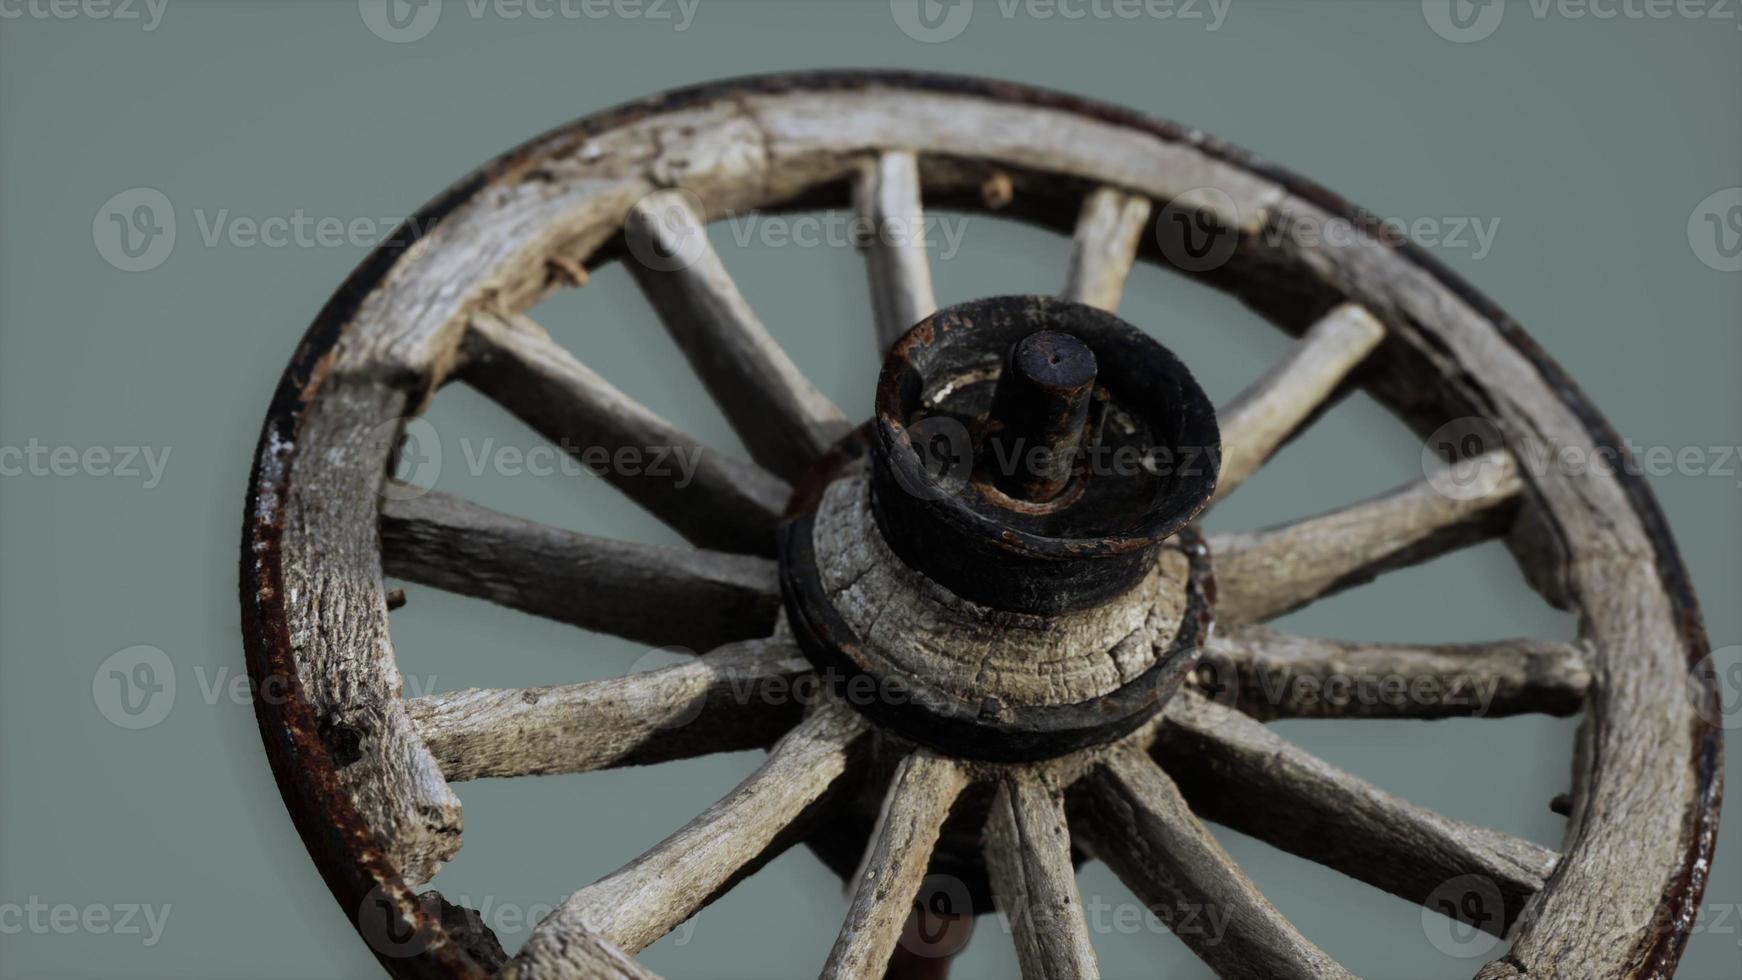 Handmade rustic vintage wooden wheel used in medieval wagons photo